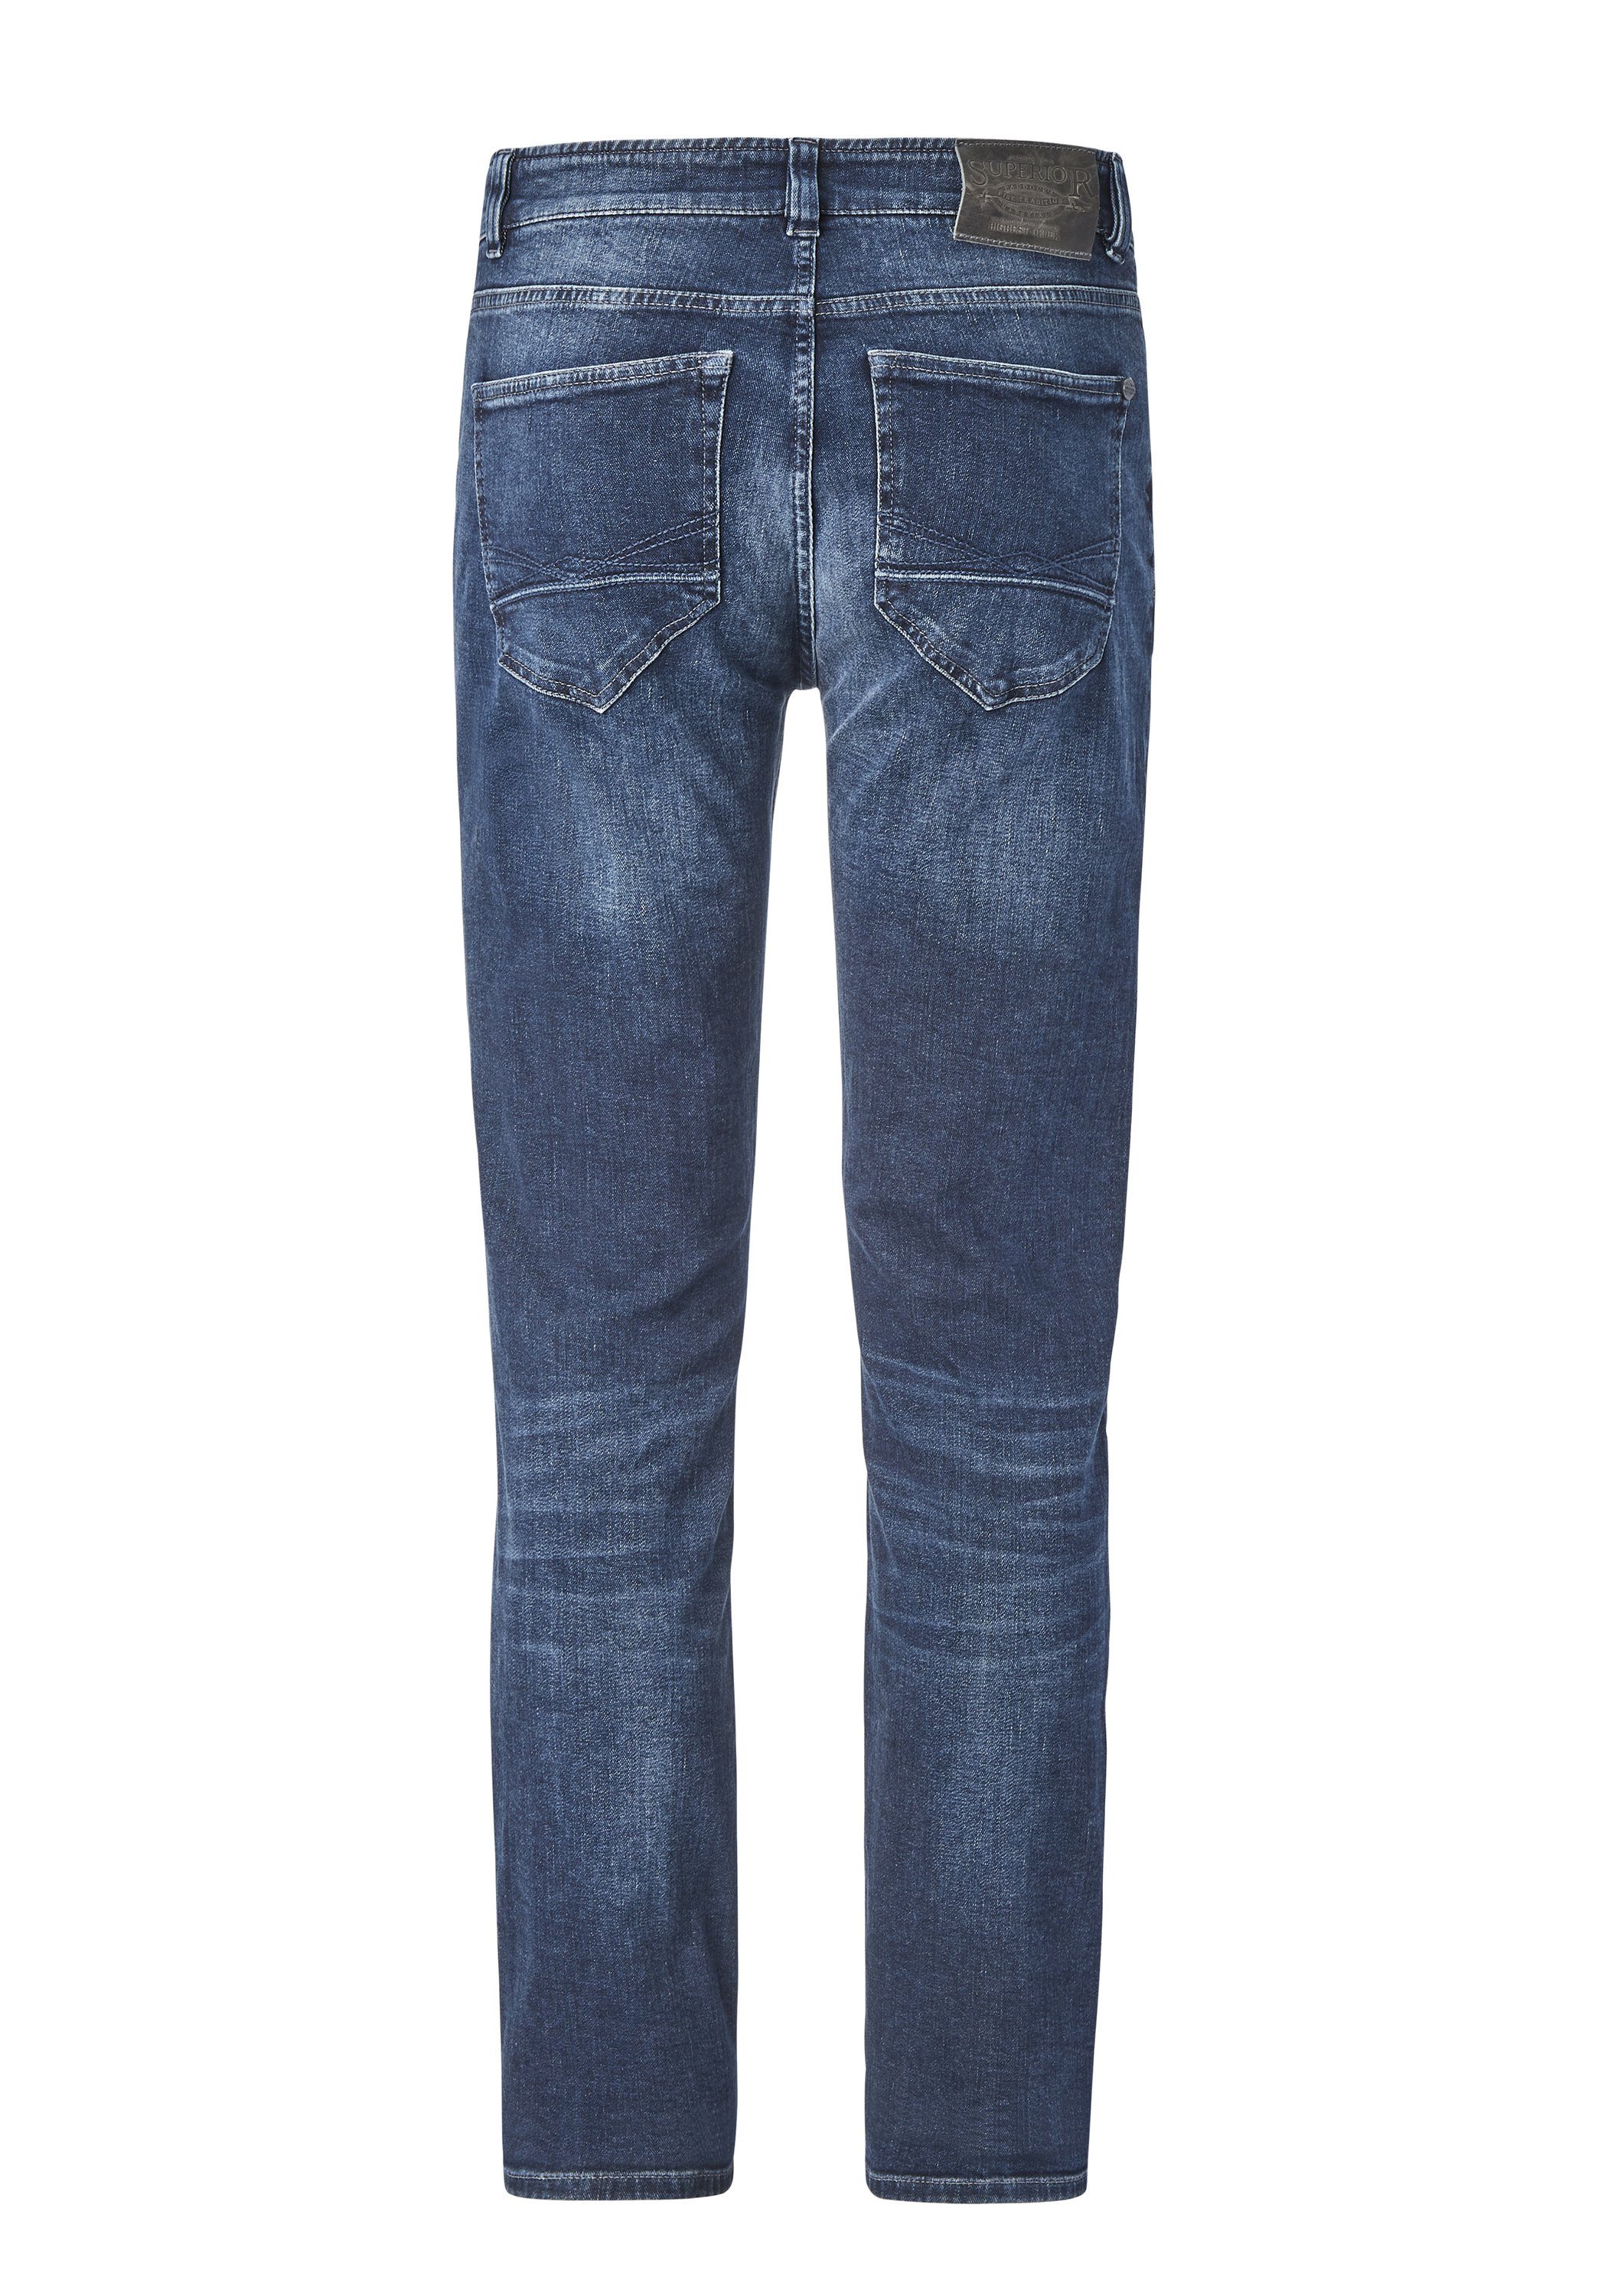 Paddock's 5-Pocket-Jeans DUKE Superior Jeans wash vintage blue dark Straight-Fit